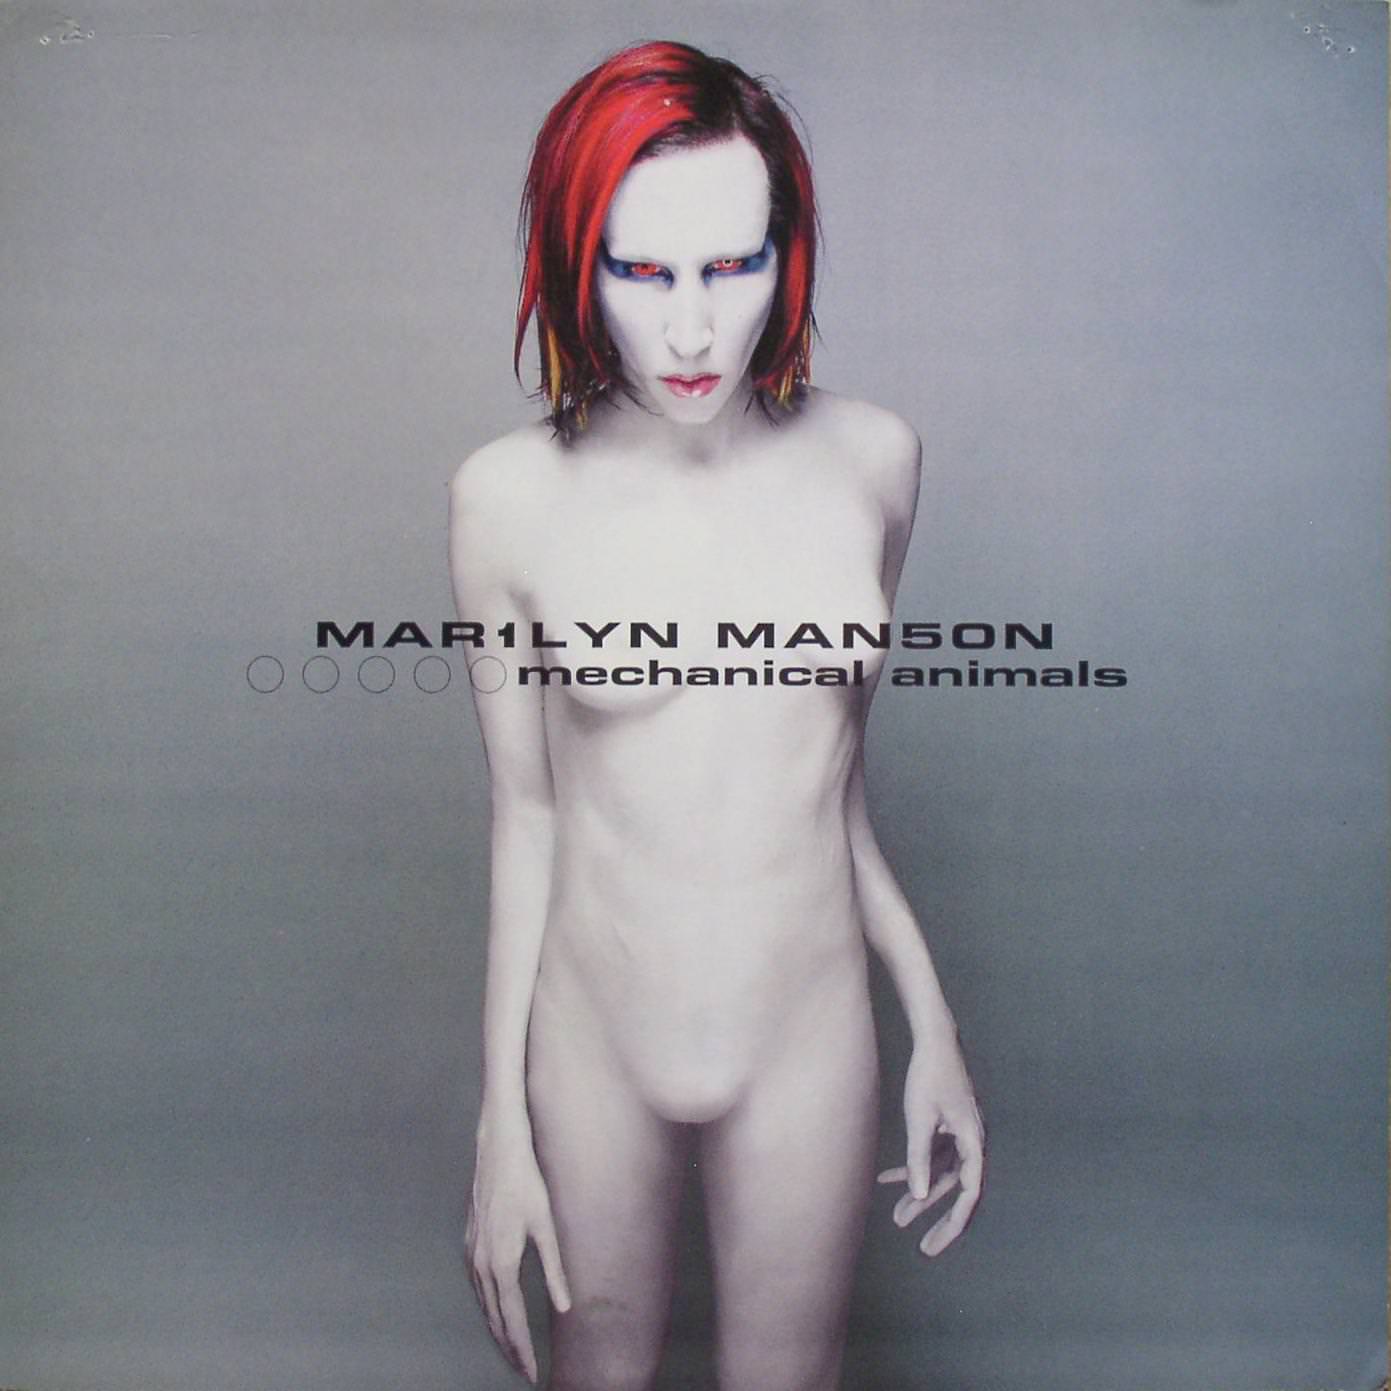 Marilyn Manson, Mechanical Animals, 1998